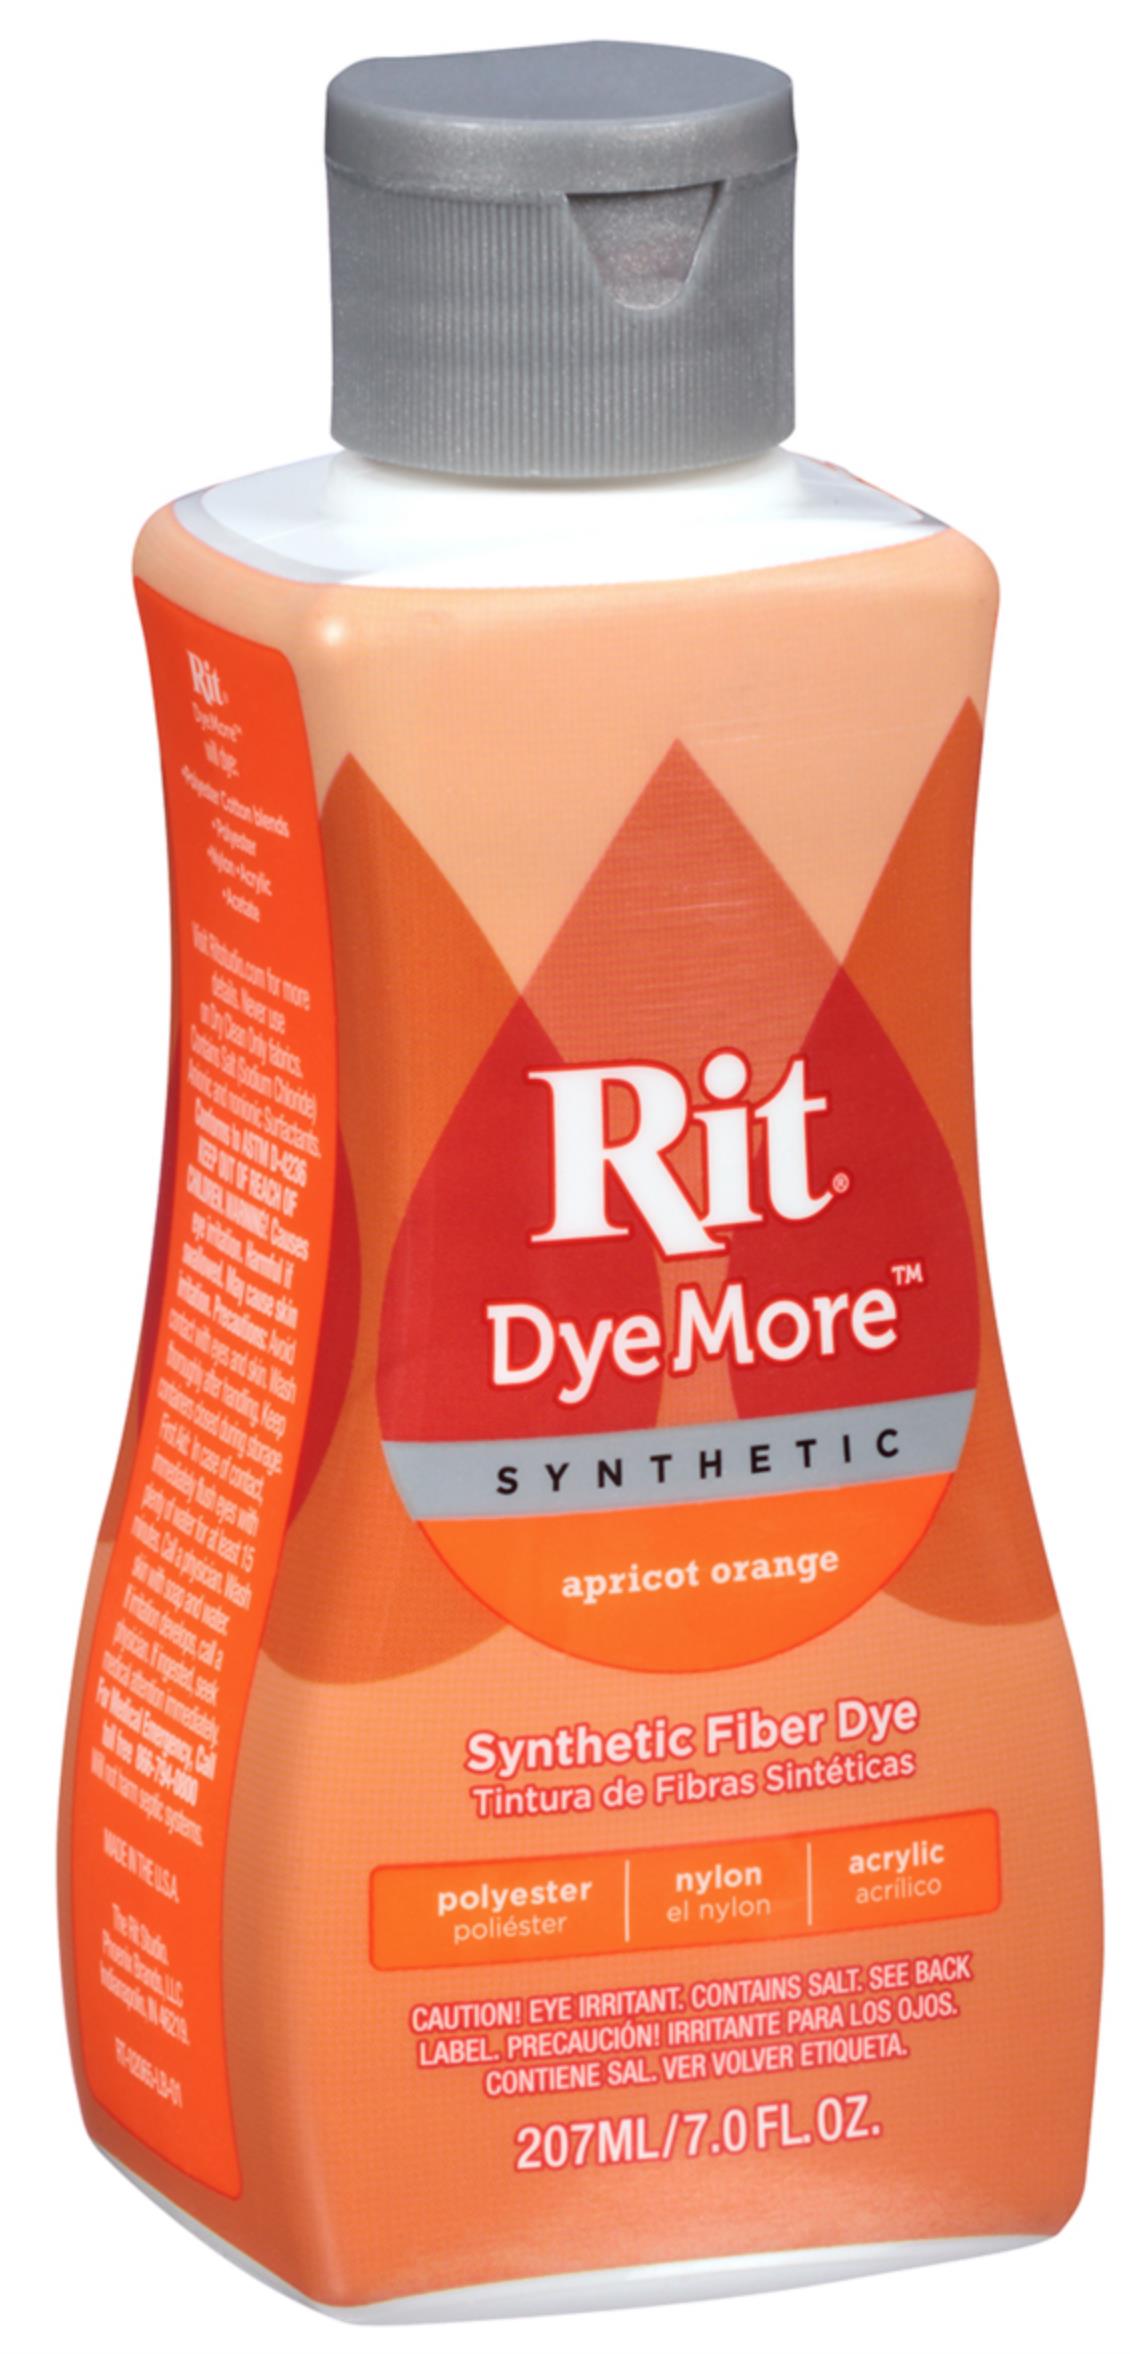 Rit DyeMore Synthetic Fiber Dye